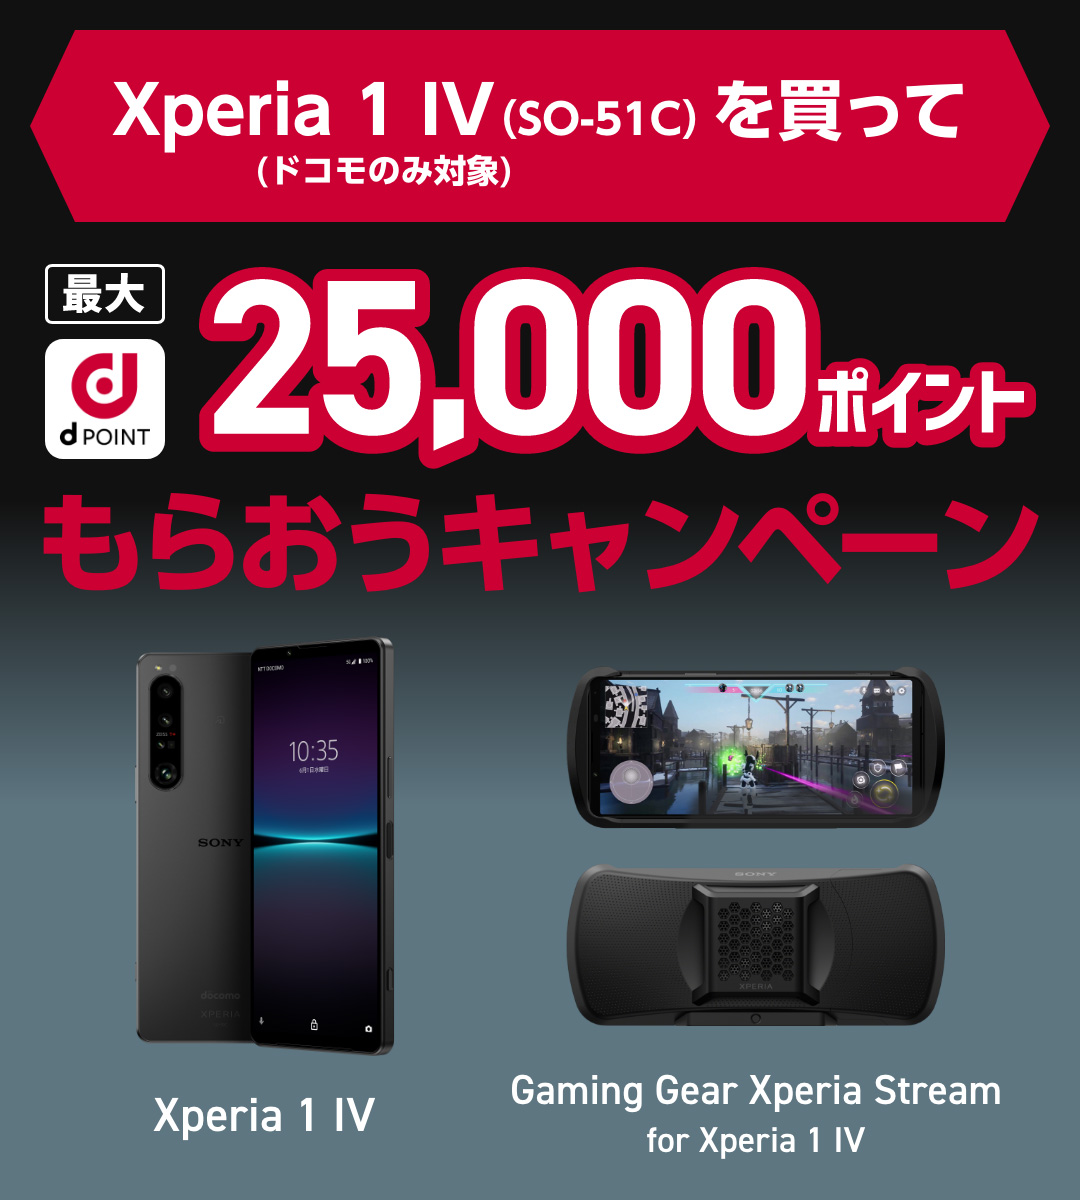 Xperia 1 IV(SO-51C)（ドコモのみ対象）を買って最大dポイント25,000ポイントをもらおうキャンペーン 購入期間：2022.9.12(月)～2022.11.30(水) 応募期間：2022.9.12(月)～2022.12.7(水)23:59 Xperia 1 IV / Gaming Gear Xperia Stream for Xperia 1 IV